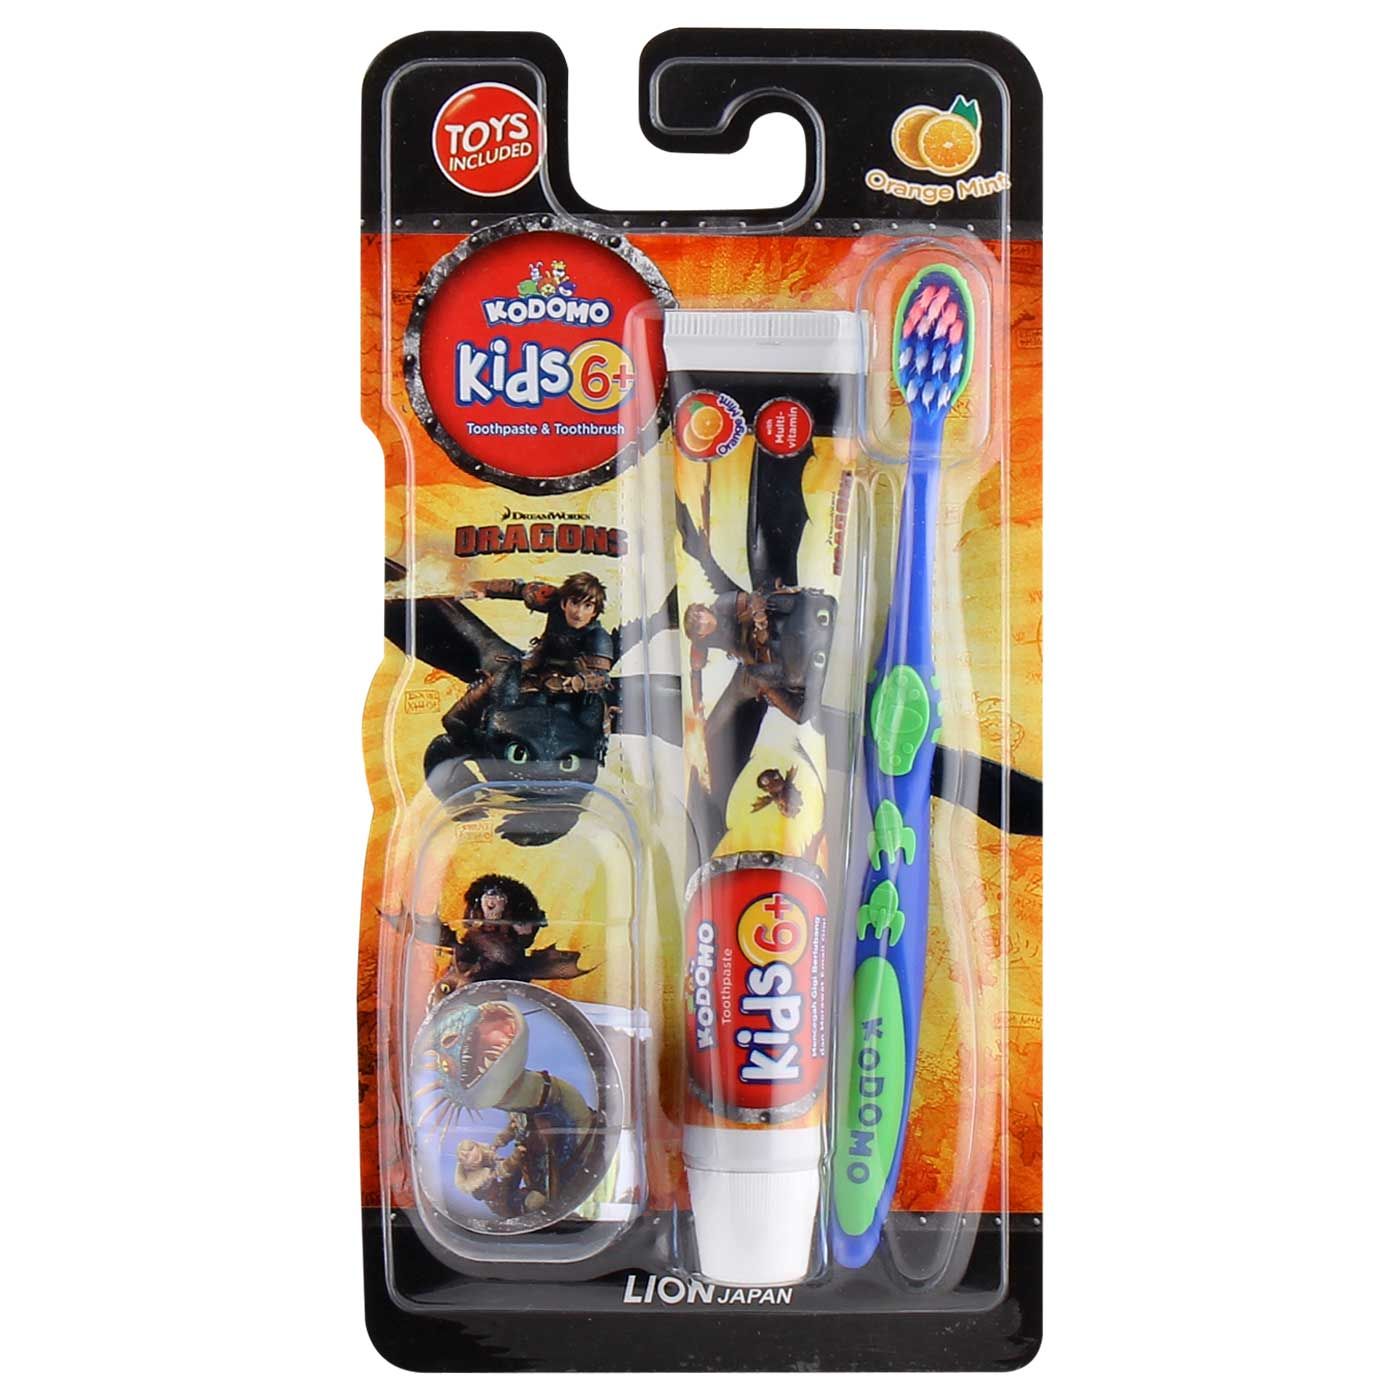 Kodomo Toothbrush 2in1 Pro Kids 2 Jet (Random) - 1